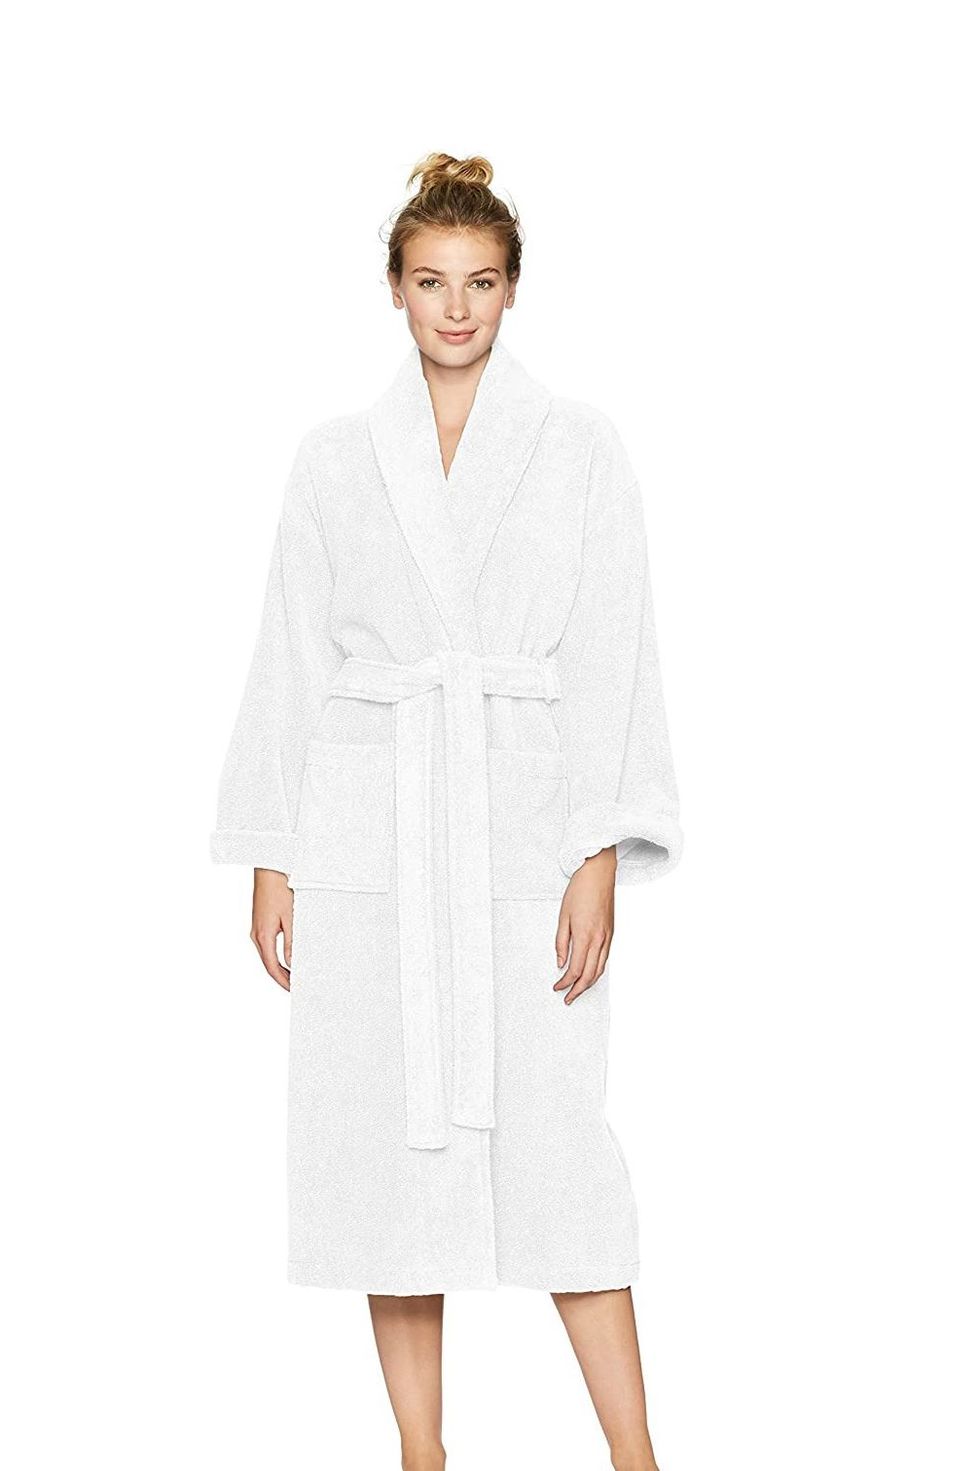 NY Threads Women Fleece Hooded Bathrobe - Plush Long Robe (Large, Taupe)